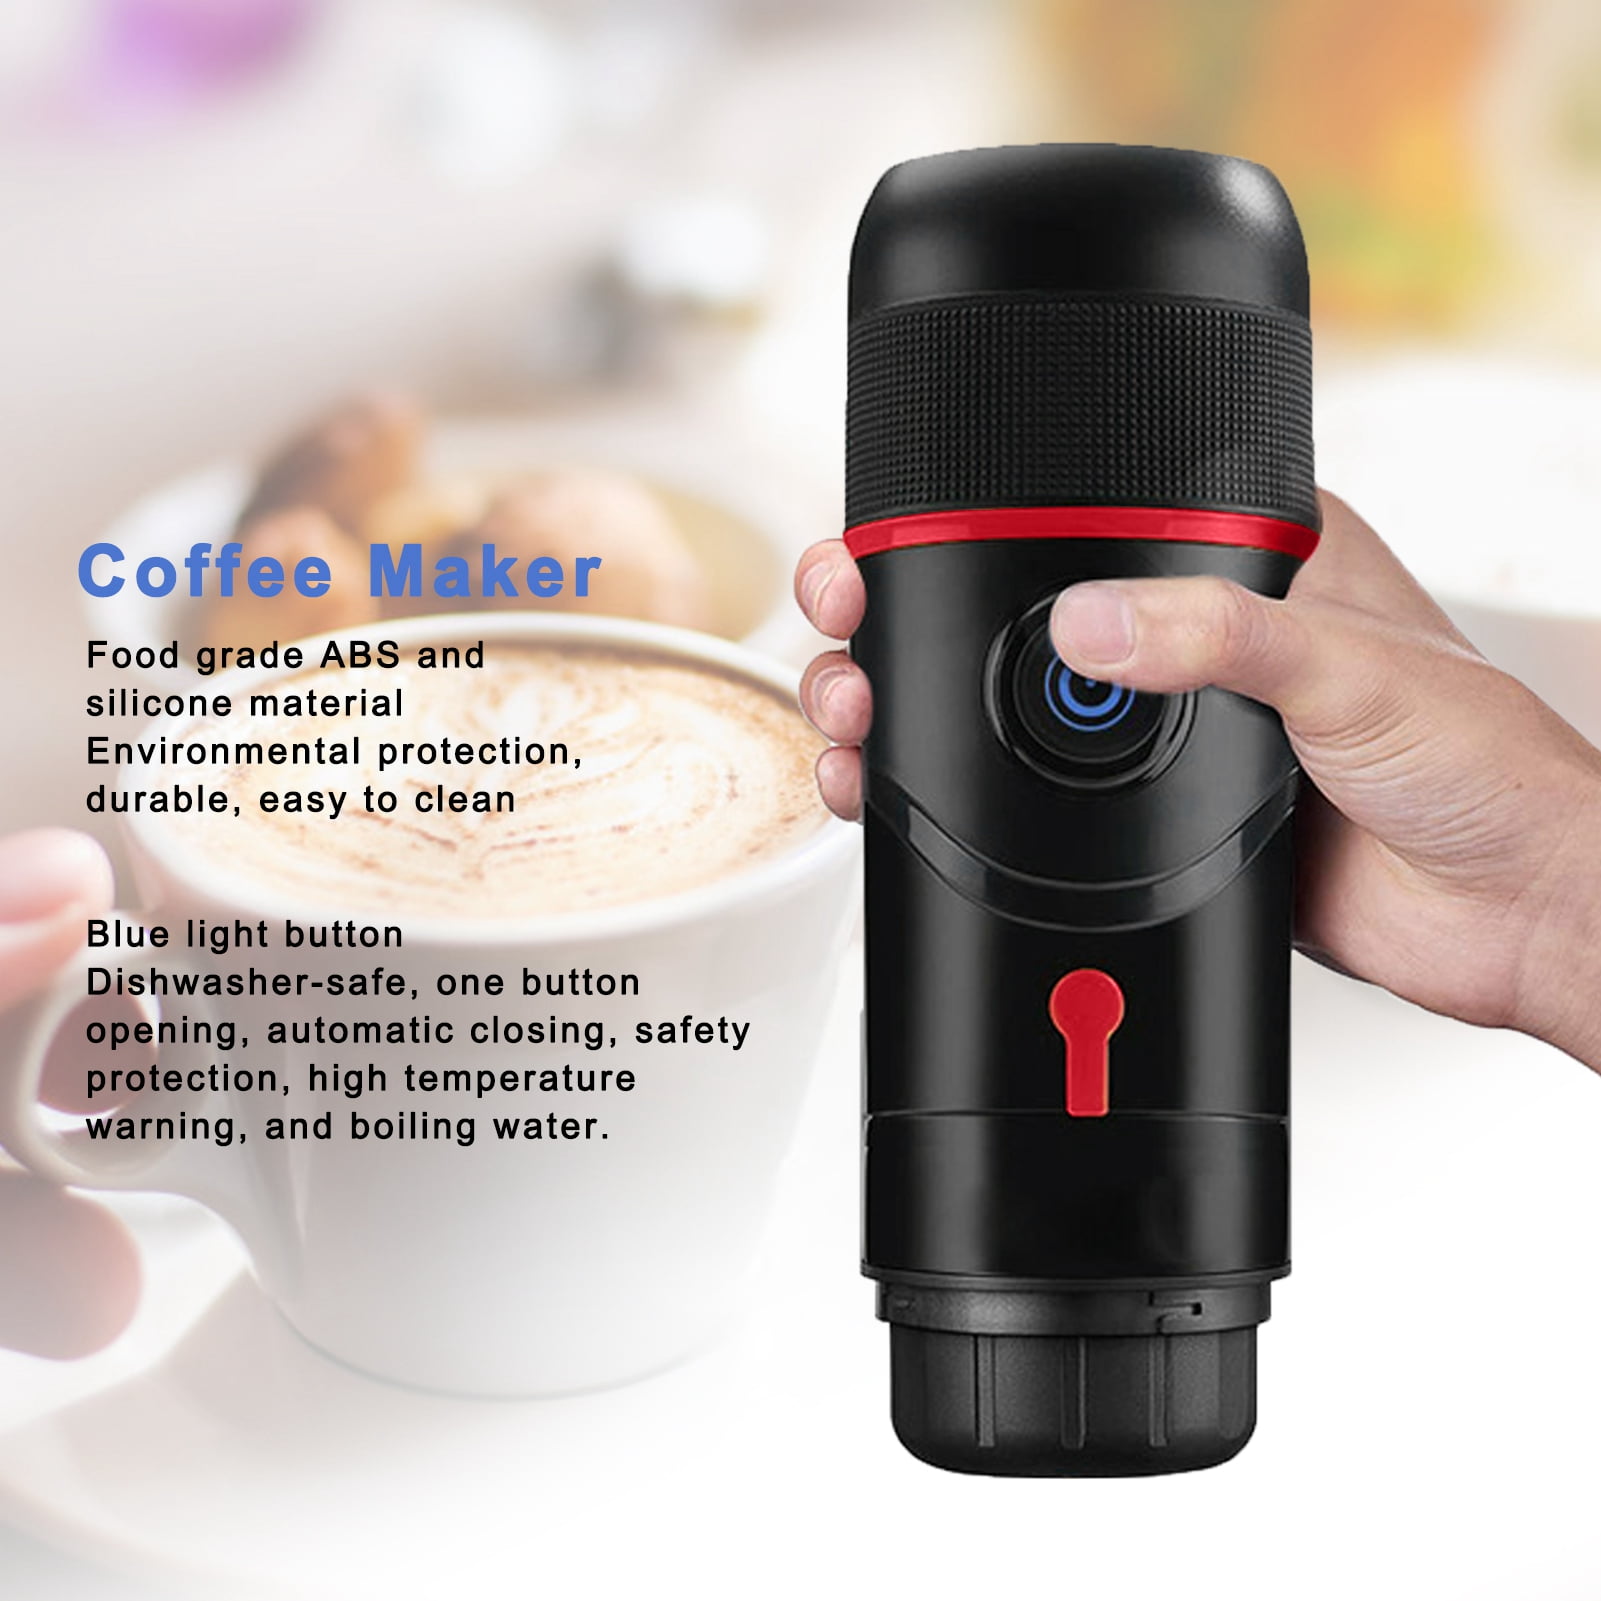 L OR Mini Coffee Capsule Machine - 4029710